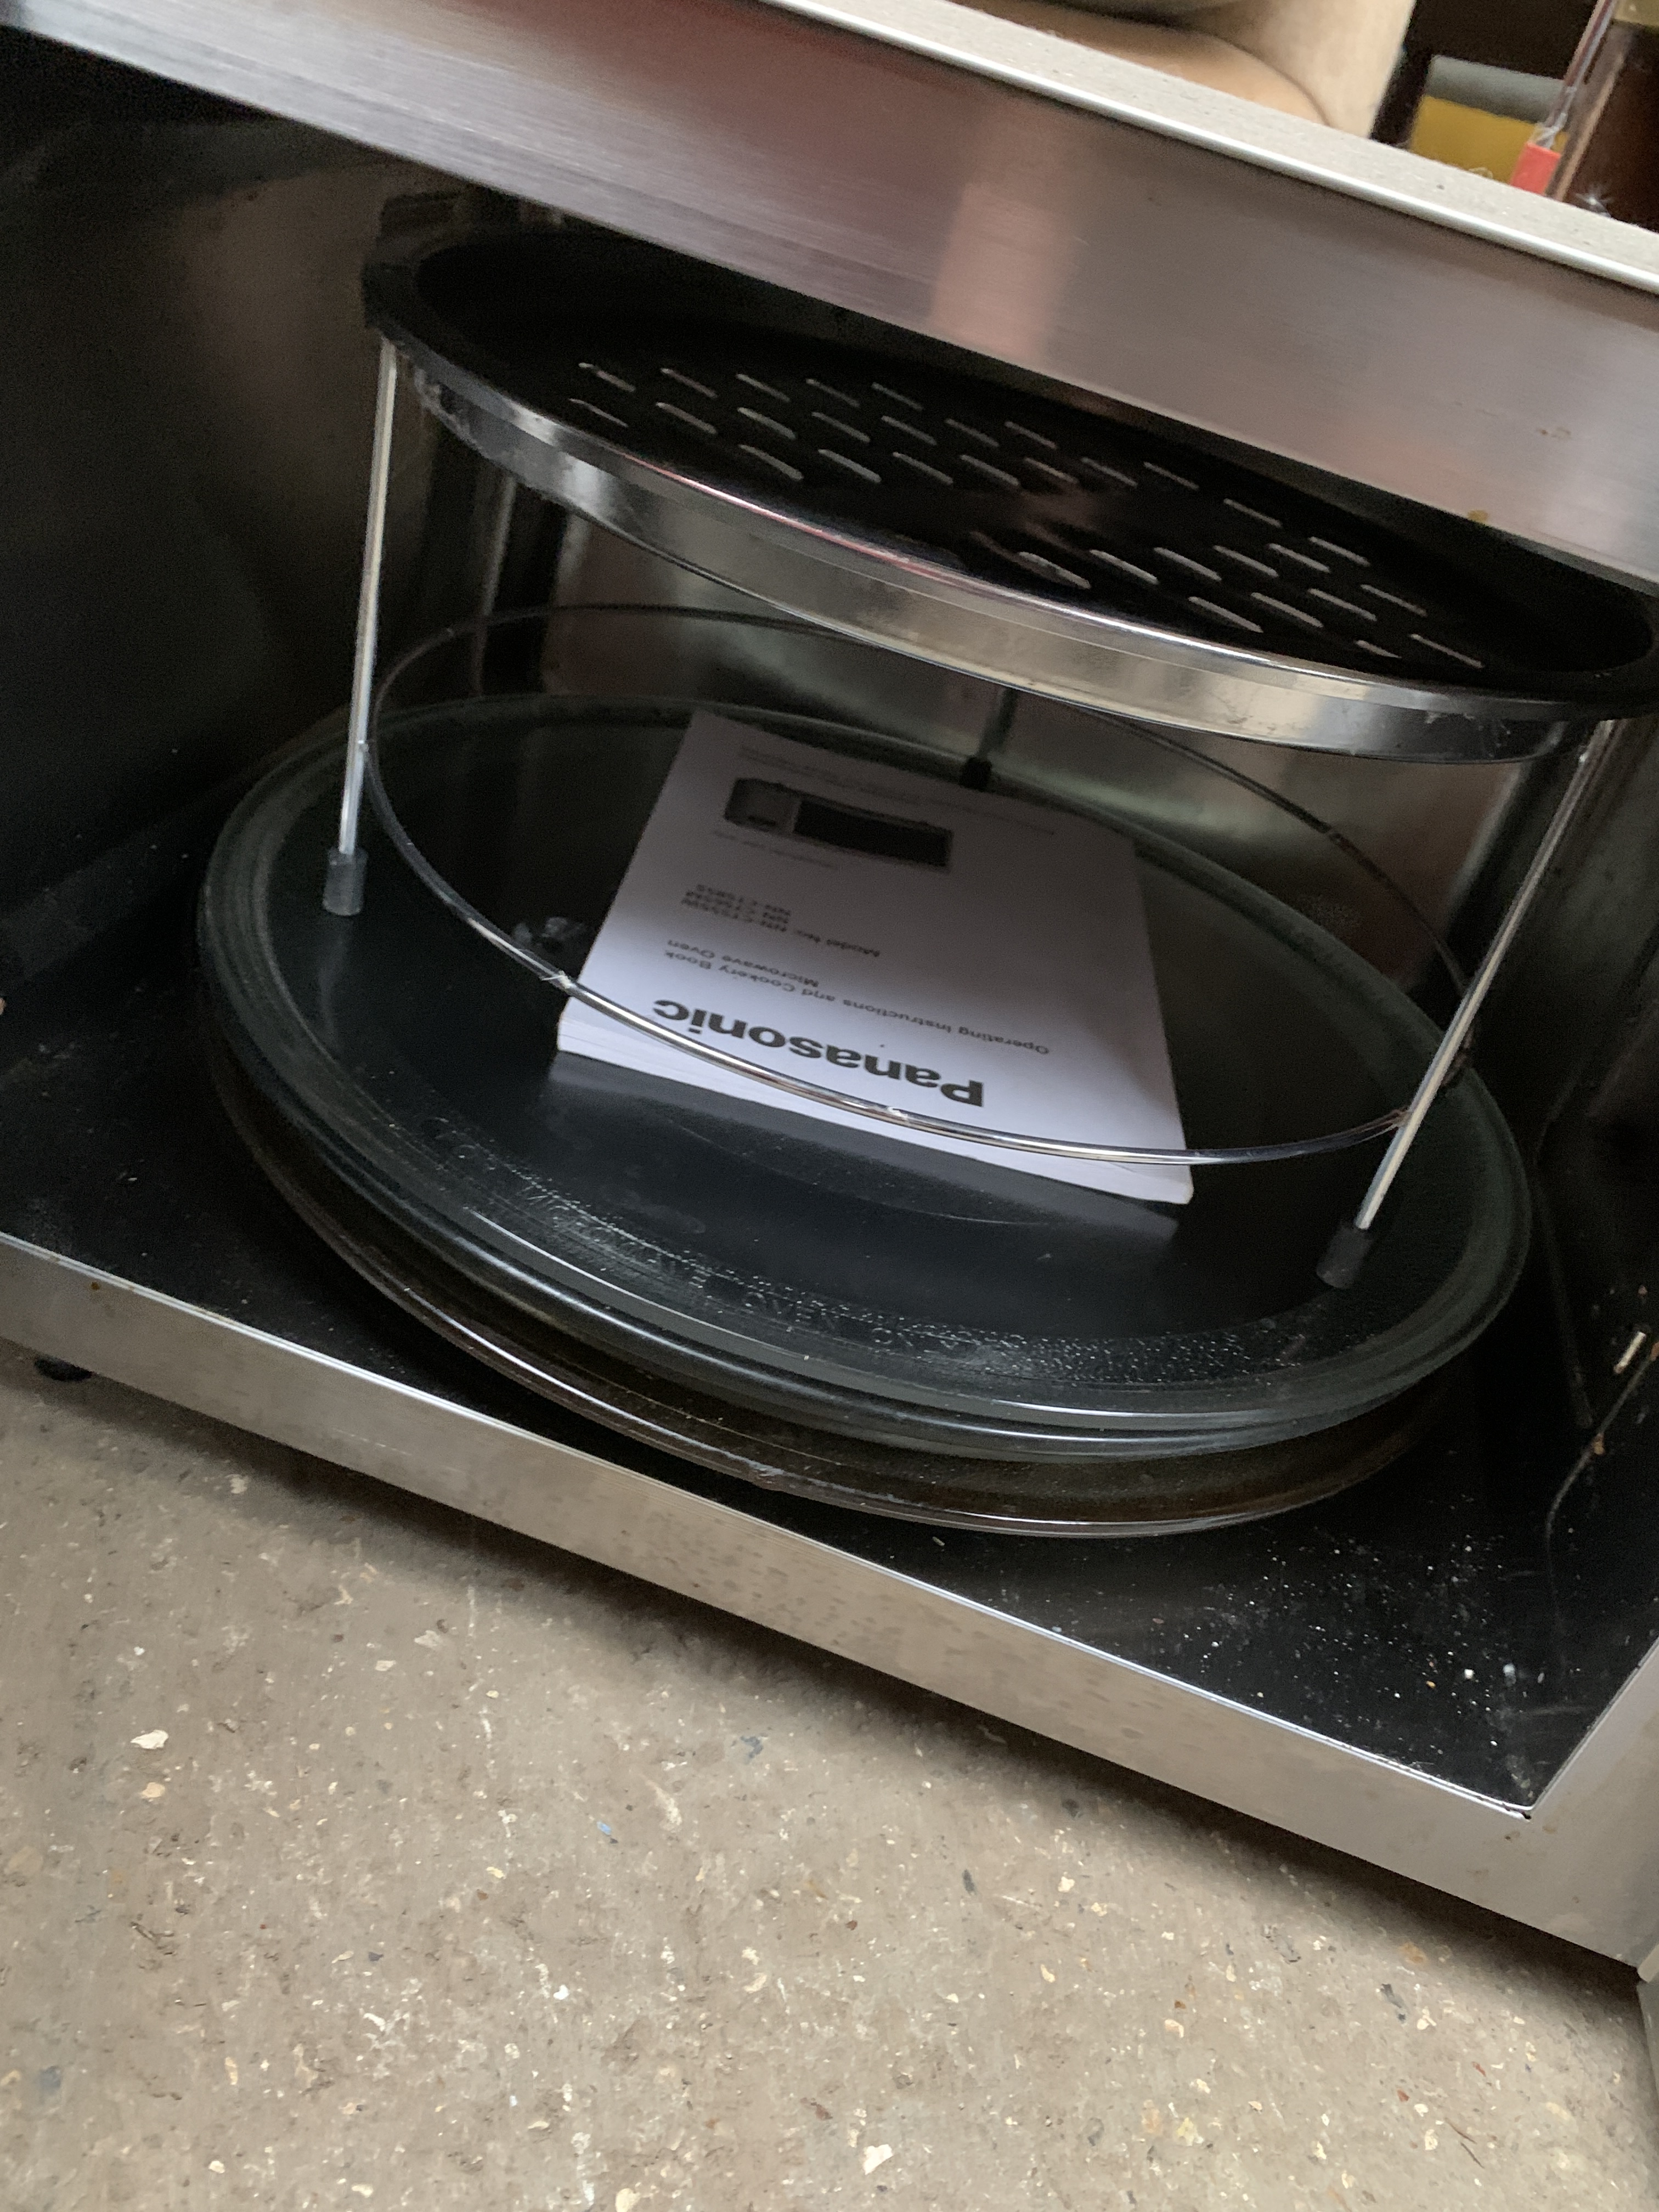 Panasonic MN-CT585S microwave oven - Image 2 of 3